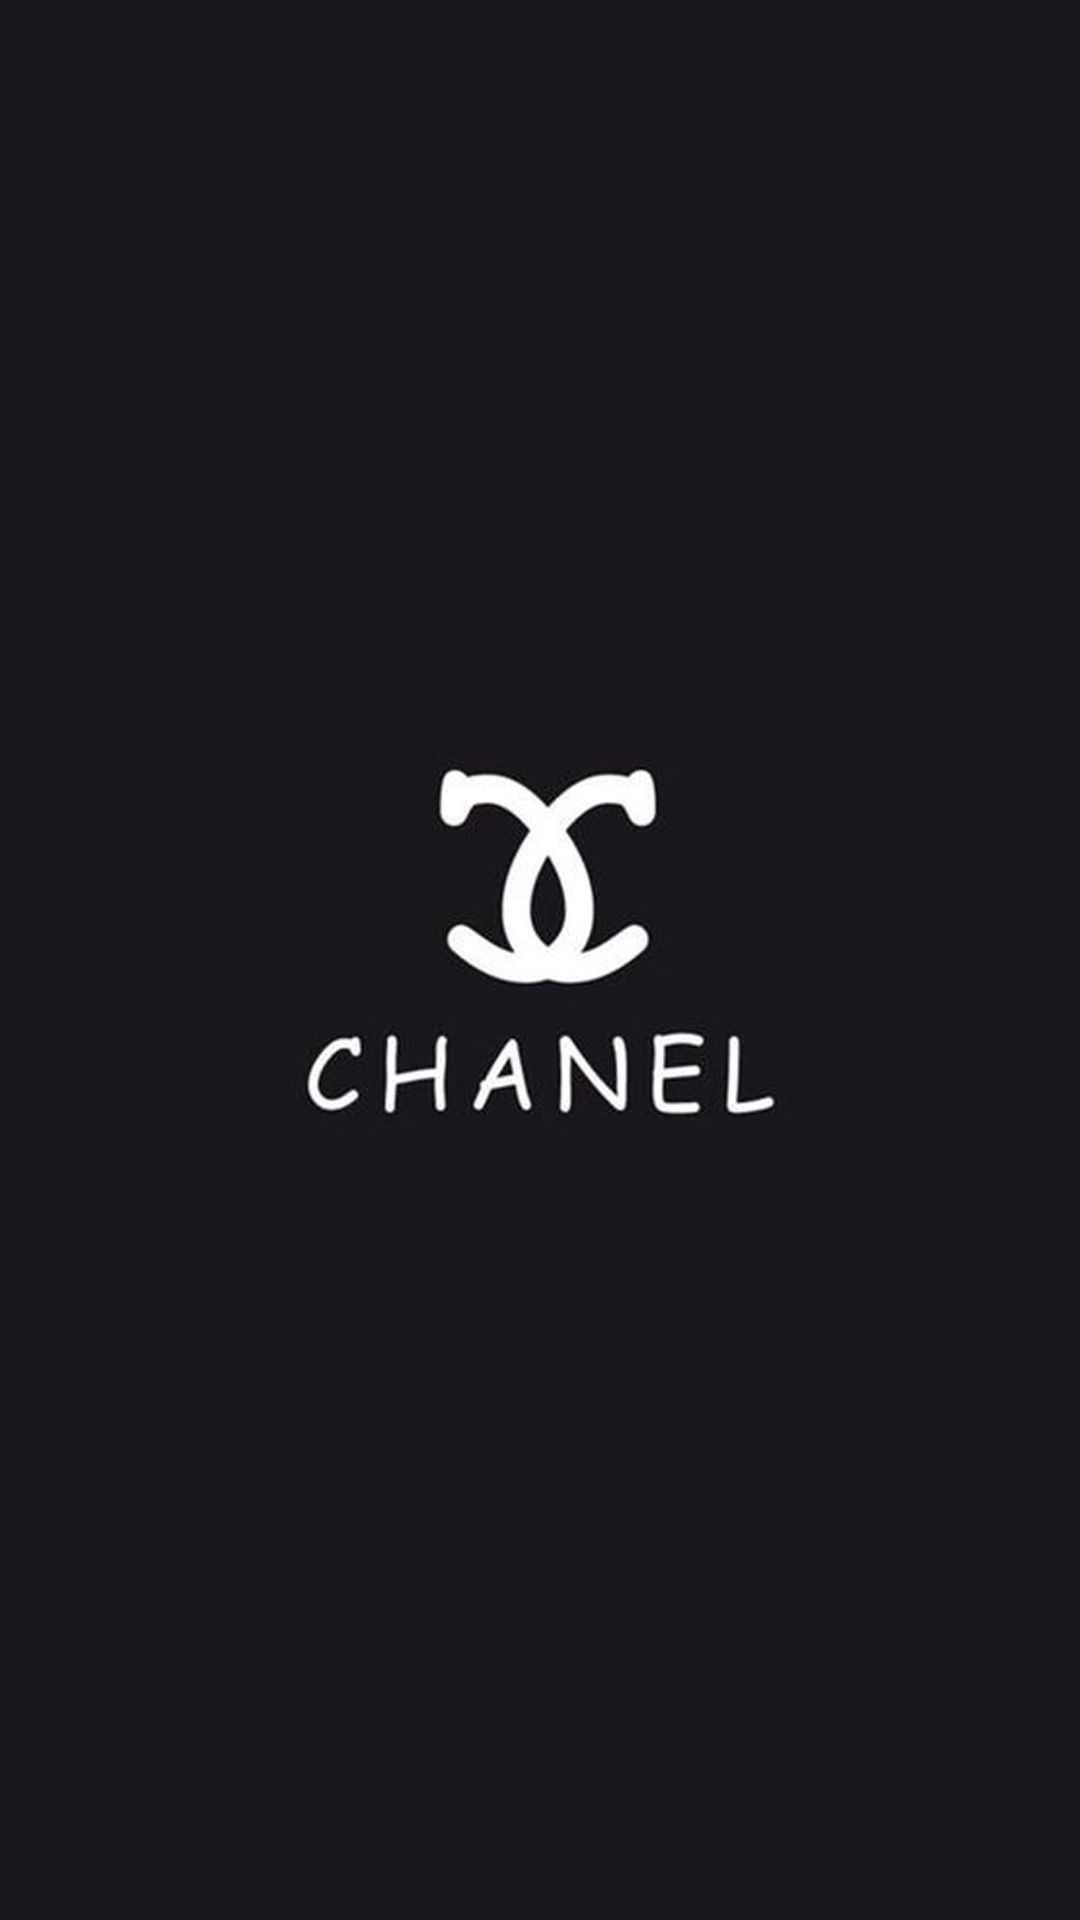 Chanel Wallpaper. Chanel Wallpaper Tumblr, Girly Chanel Wallpaper and Chanel Wallpaper